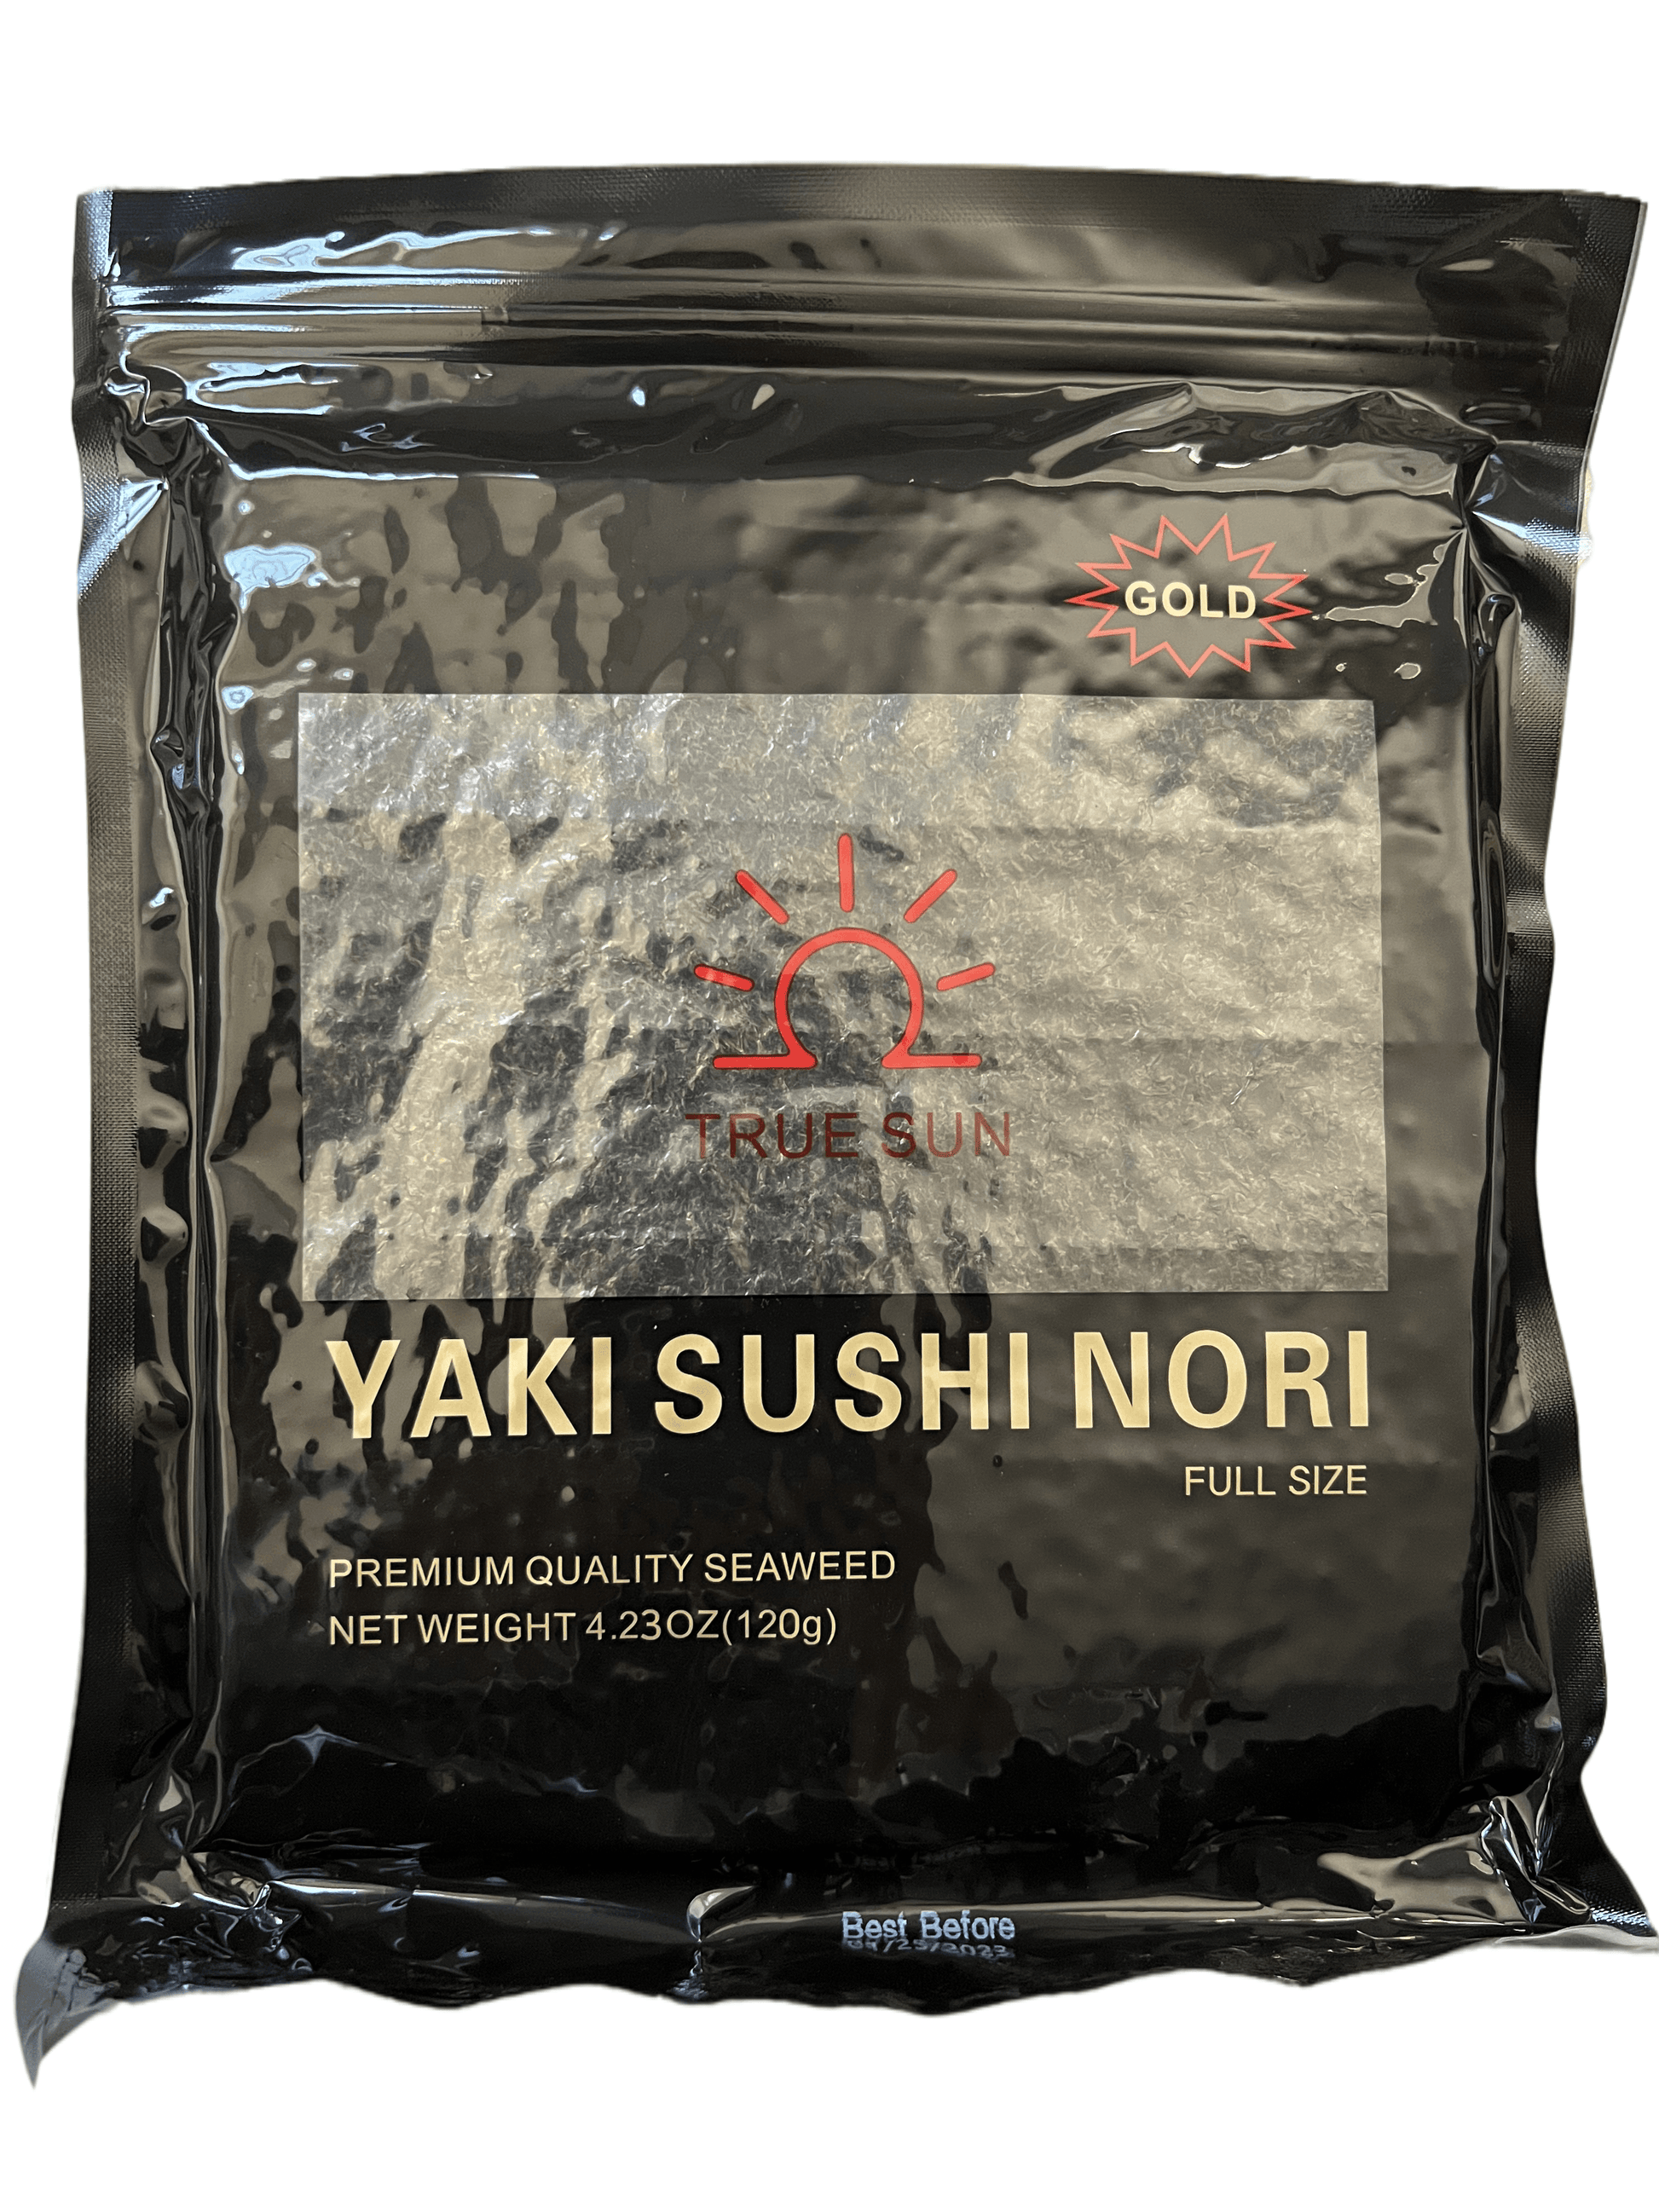 Buy More get More free True Sun Sushi Nori Special Black Gold, Full Sheet ,50 pieces/bag - True Sun